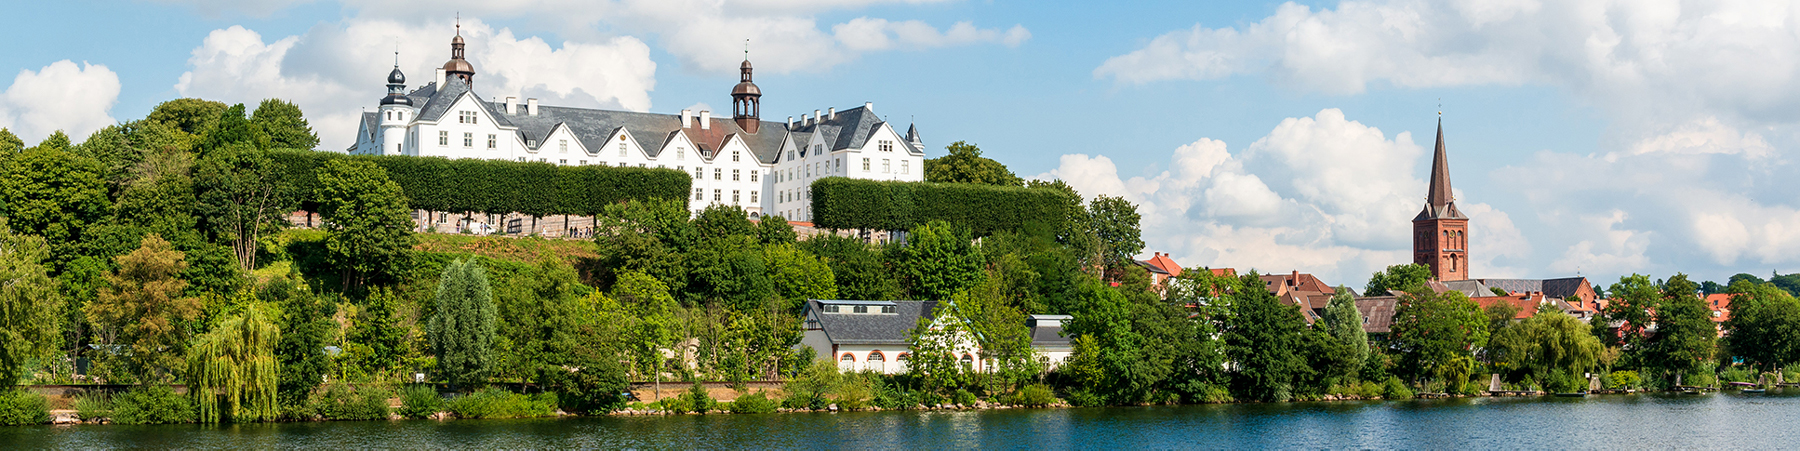 Plöner Schloss am Plöner See in Schleswig-Holstein